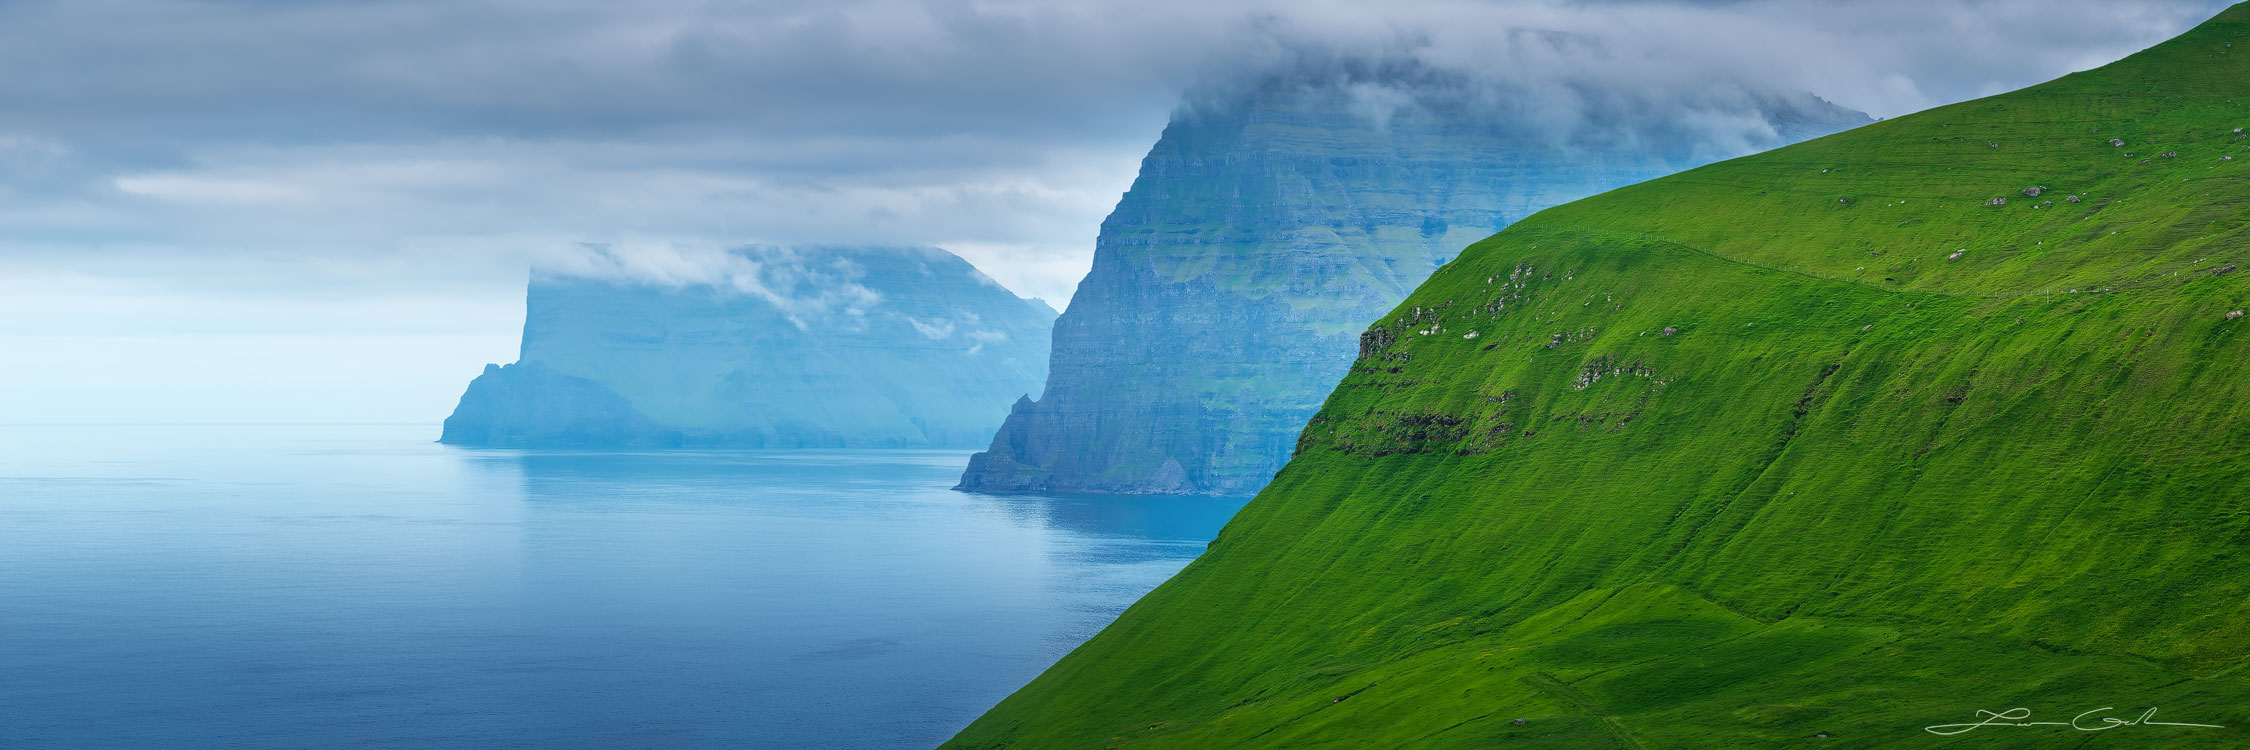 Steep rock wall mountain islands with lots of green grass - Faroe Islands - Gintchin Fine Art